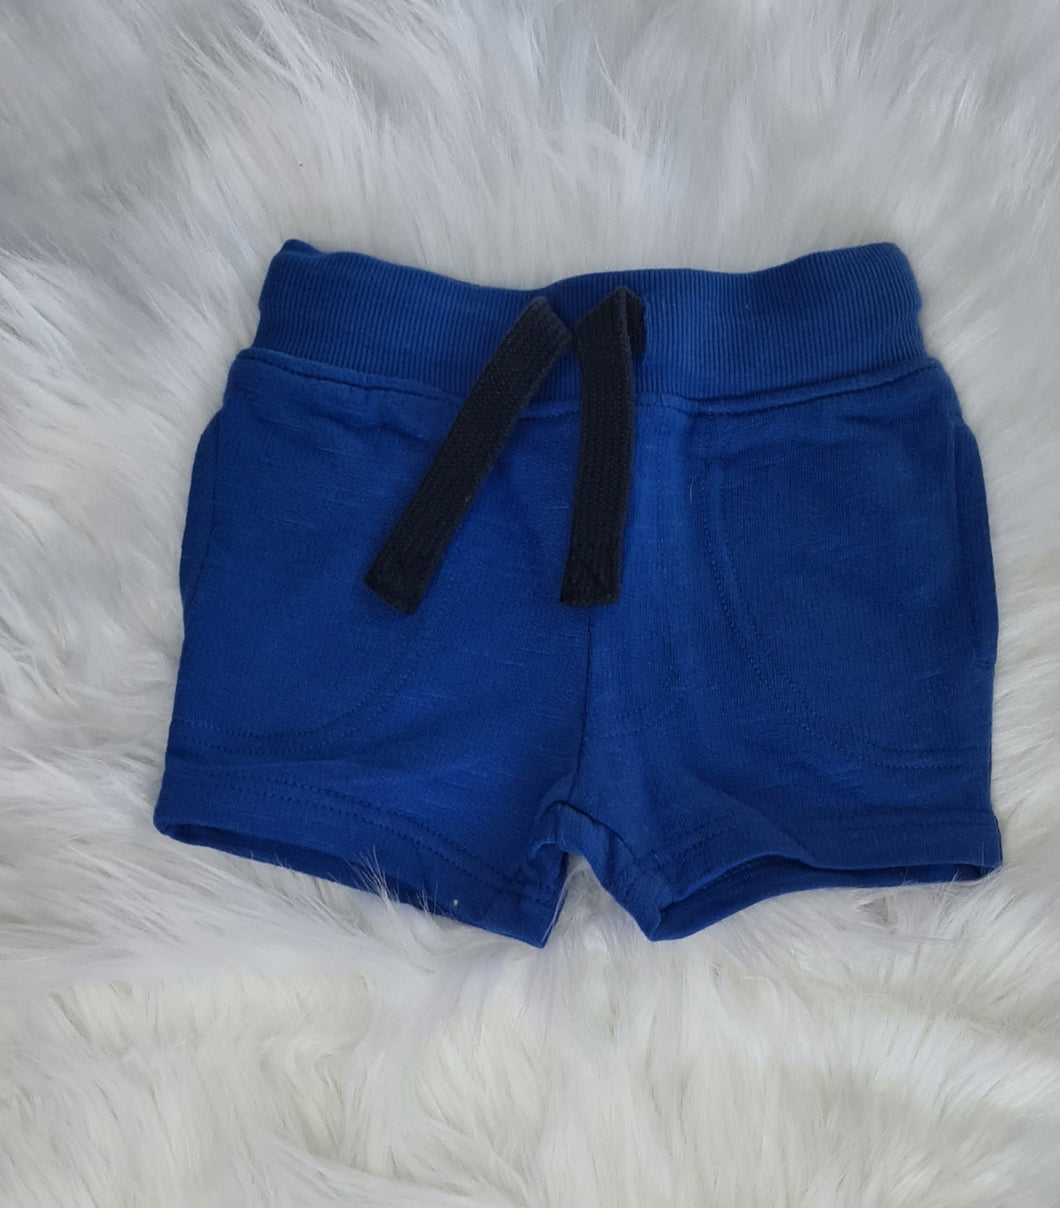 Boys 3-6 Months - Next - Blue Shorts